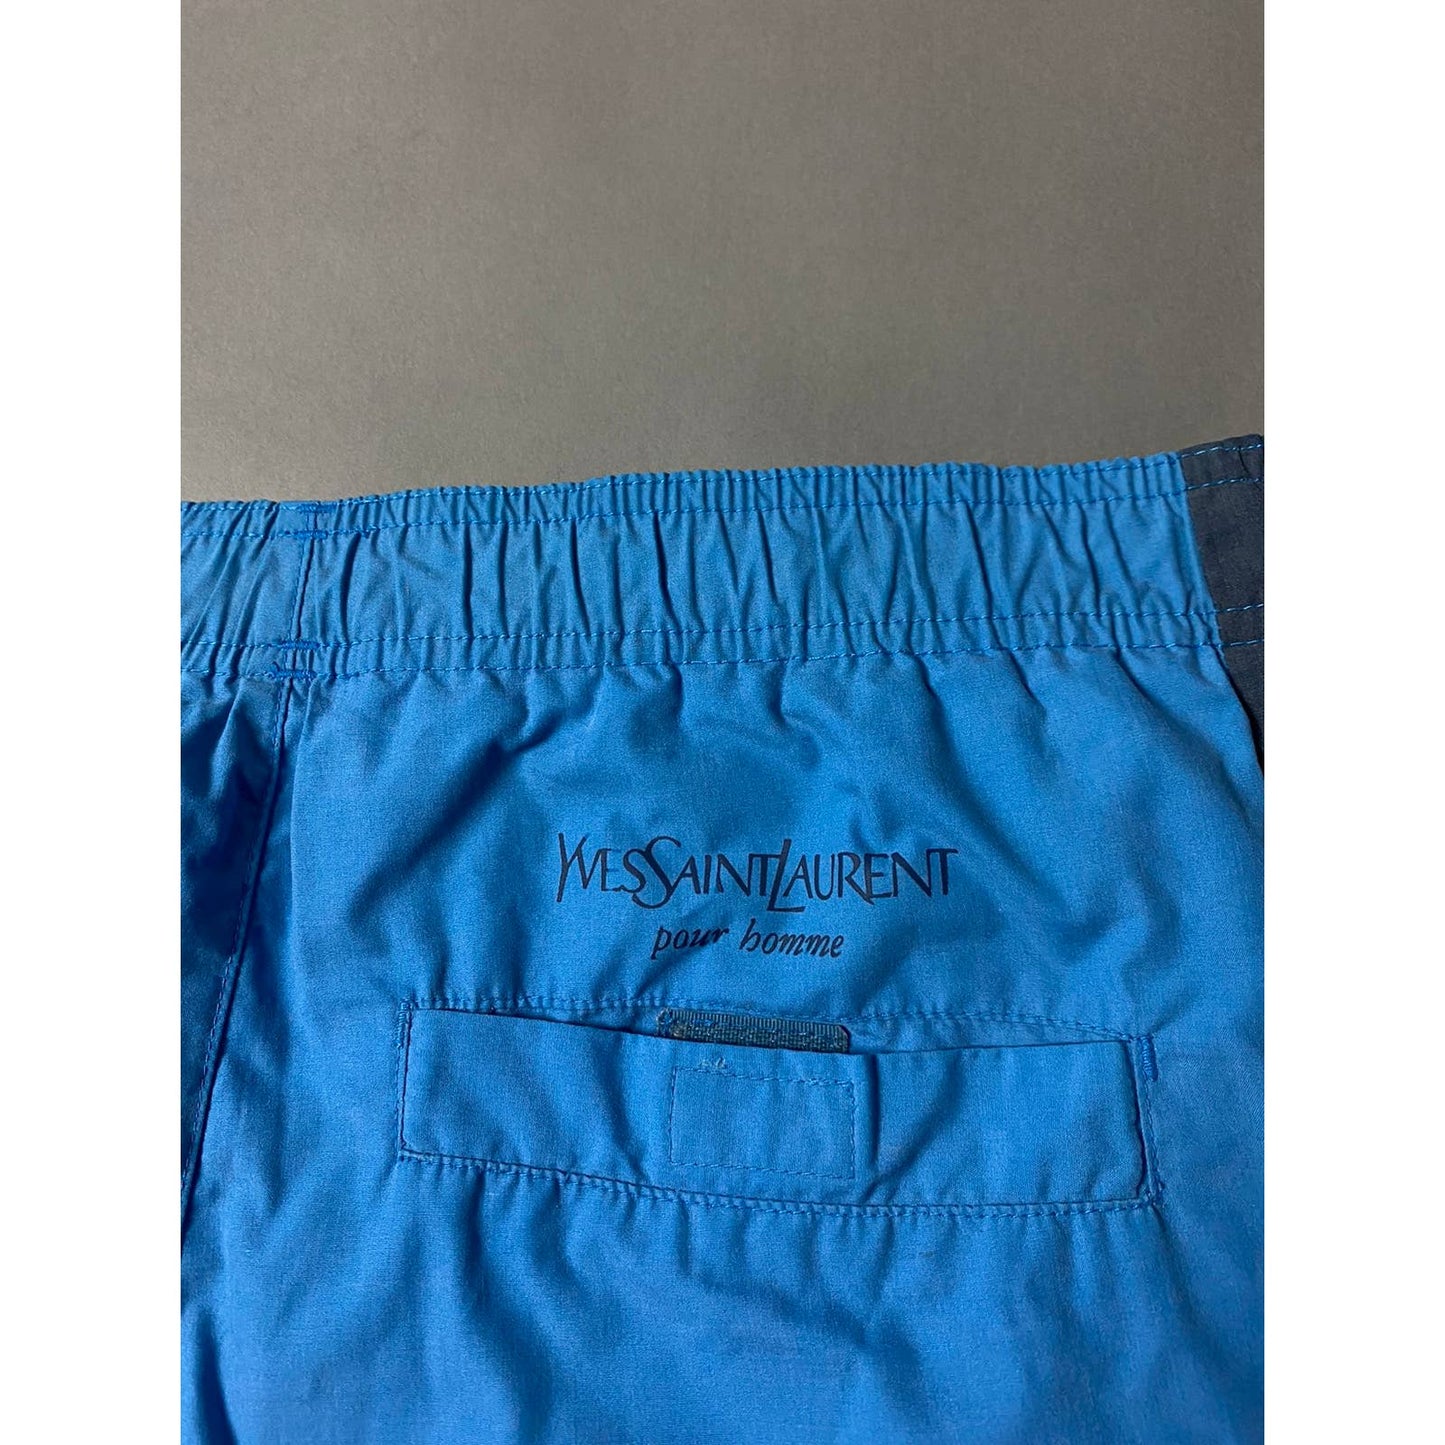 90s Yves Saint Laurent vintage YSL blue shorts small logo